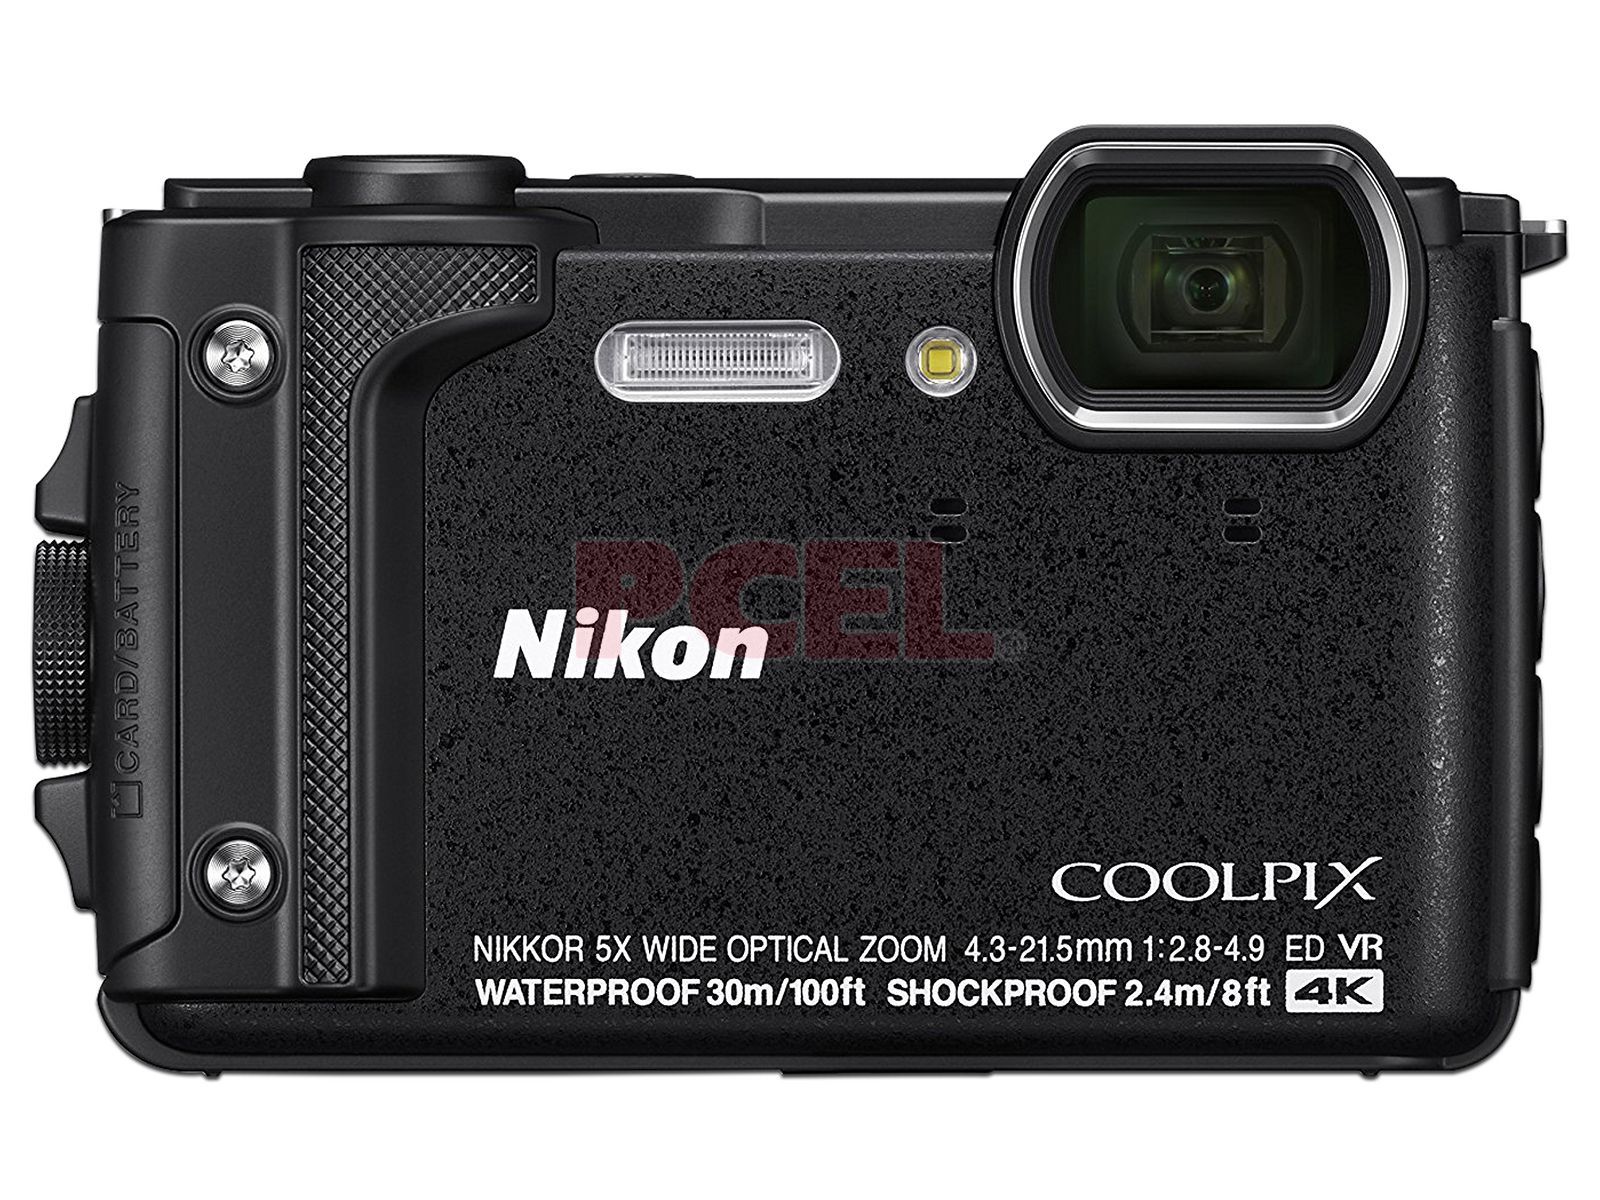 Cámara Fotográfica Digital Nikon COOLPIX W300, 16MP, Zoom Óptico 5x, Video 4K, Wi-Fi, USB, Micro HDMI, GPS. Color negro.